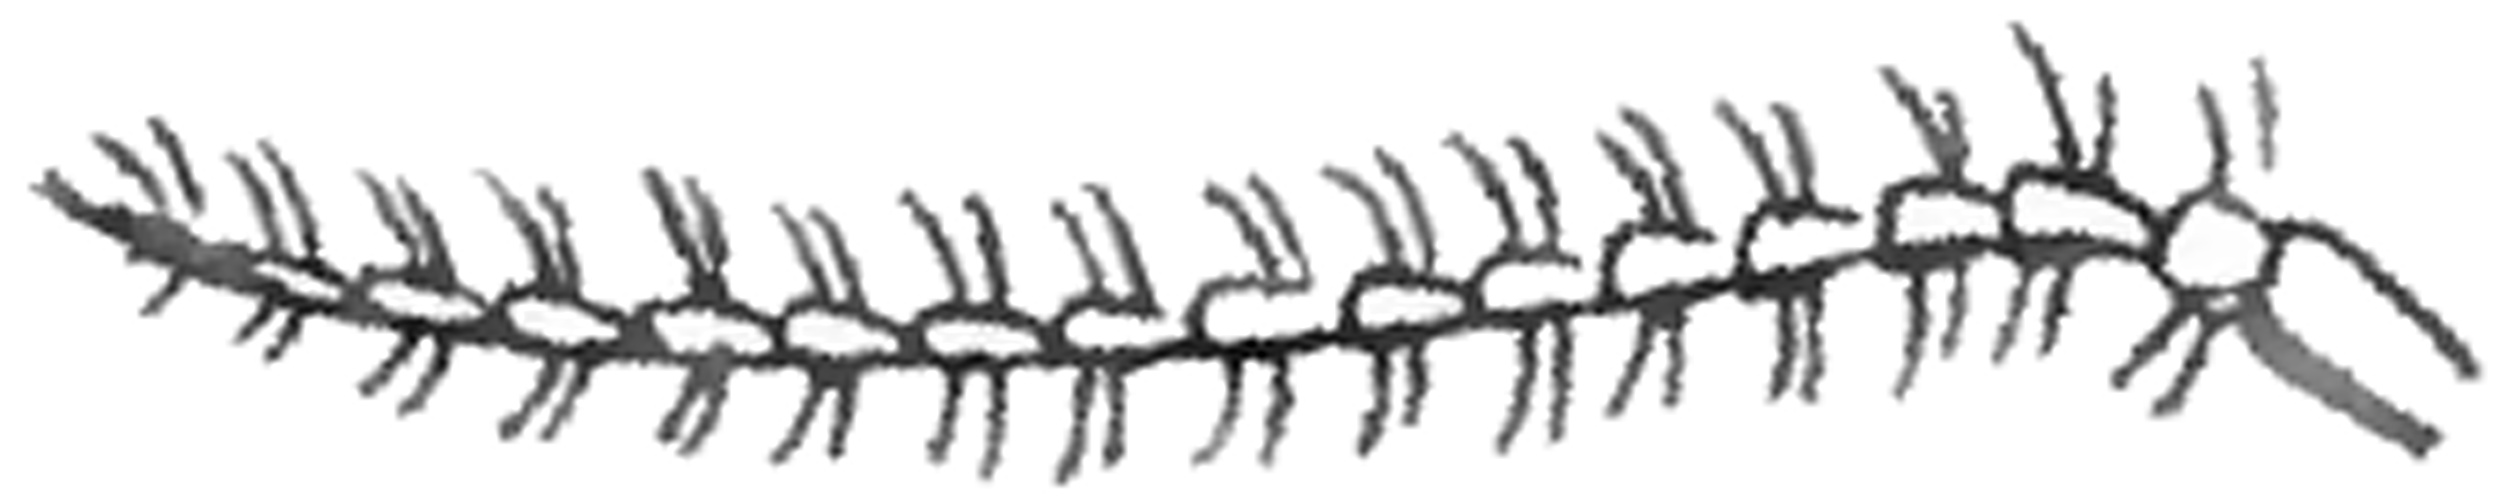 Euphylidorea dispar © <a rel="nofollow" class="external text" href="https://archive.org/stream/insectabritannic03walkuoft#page/n407/mode/2up">Walker, F. (1856): Insecta Britannica: Diptera. Vol III, p 407, plate XXVII.</a>